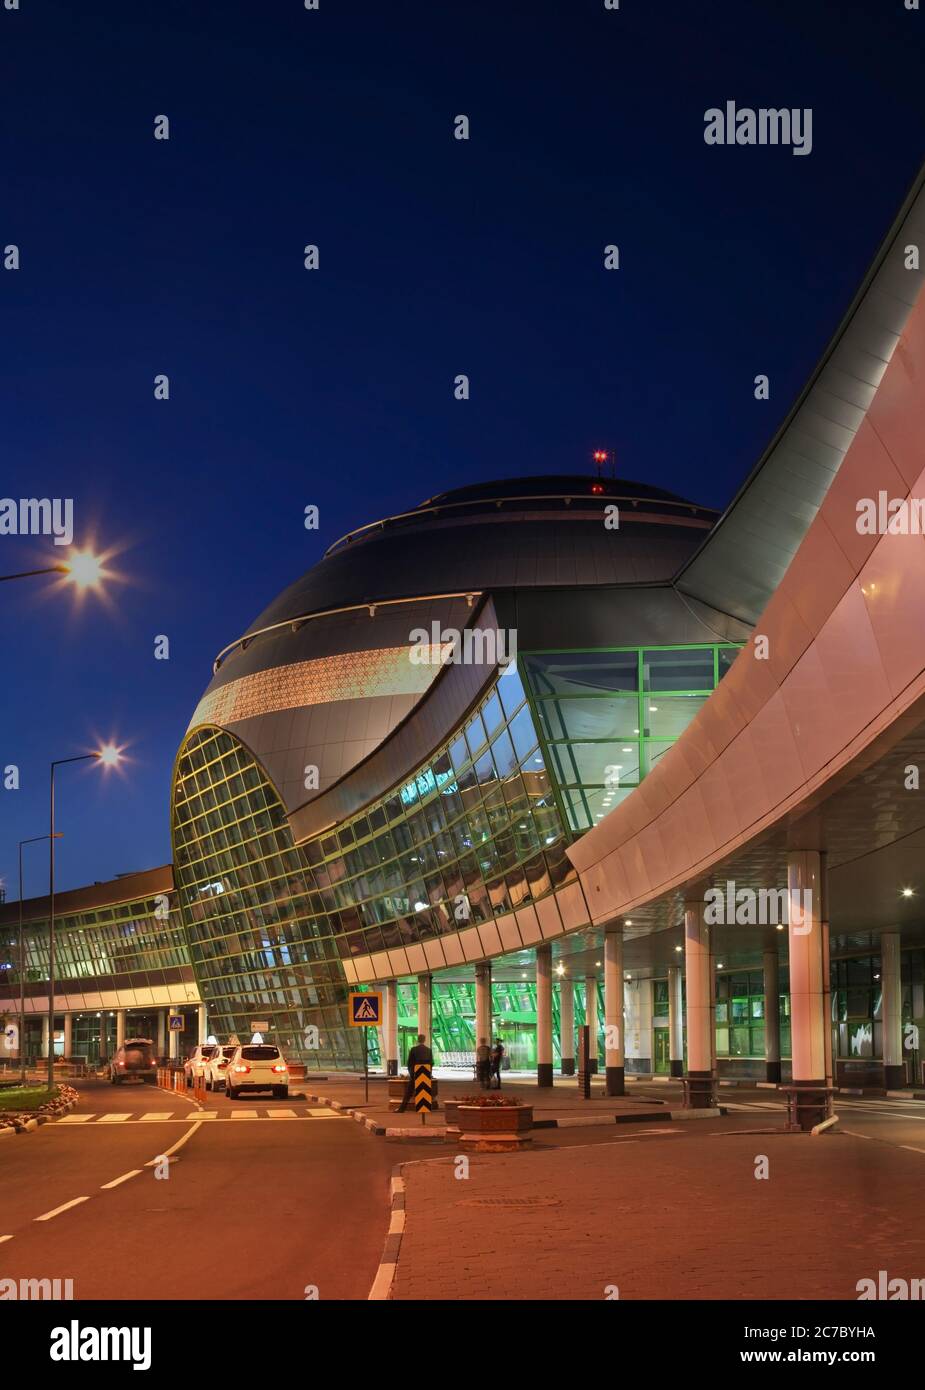 Astana Nursultan Nazarbayev International Airport. Kazakhstan Stock Photo